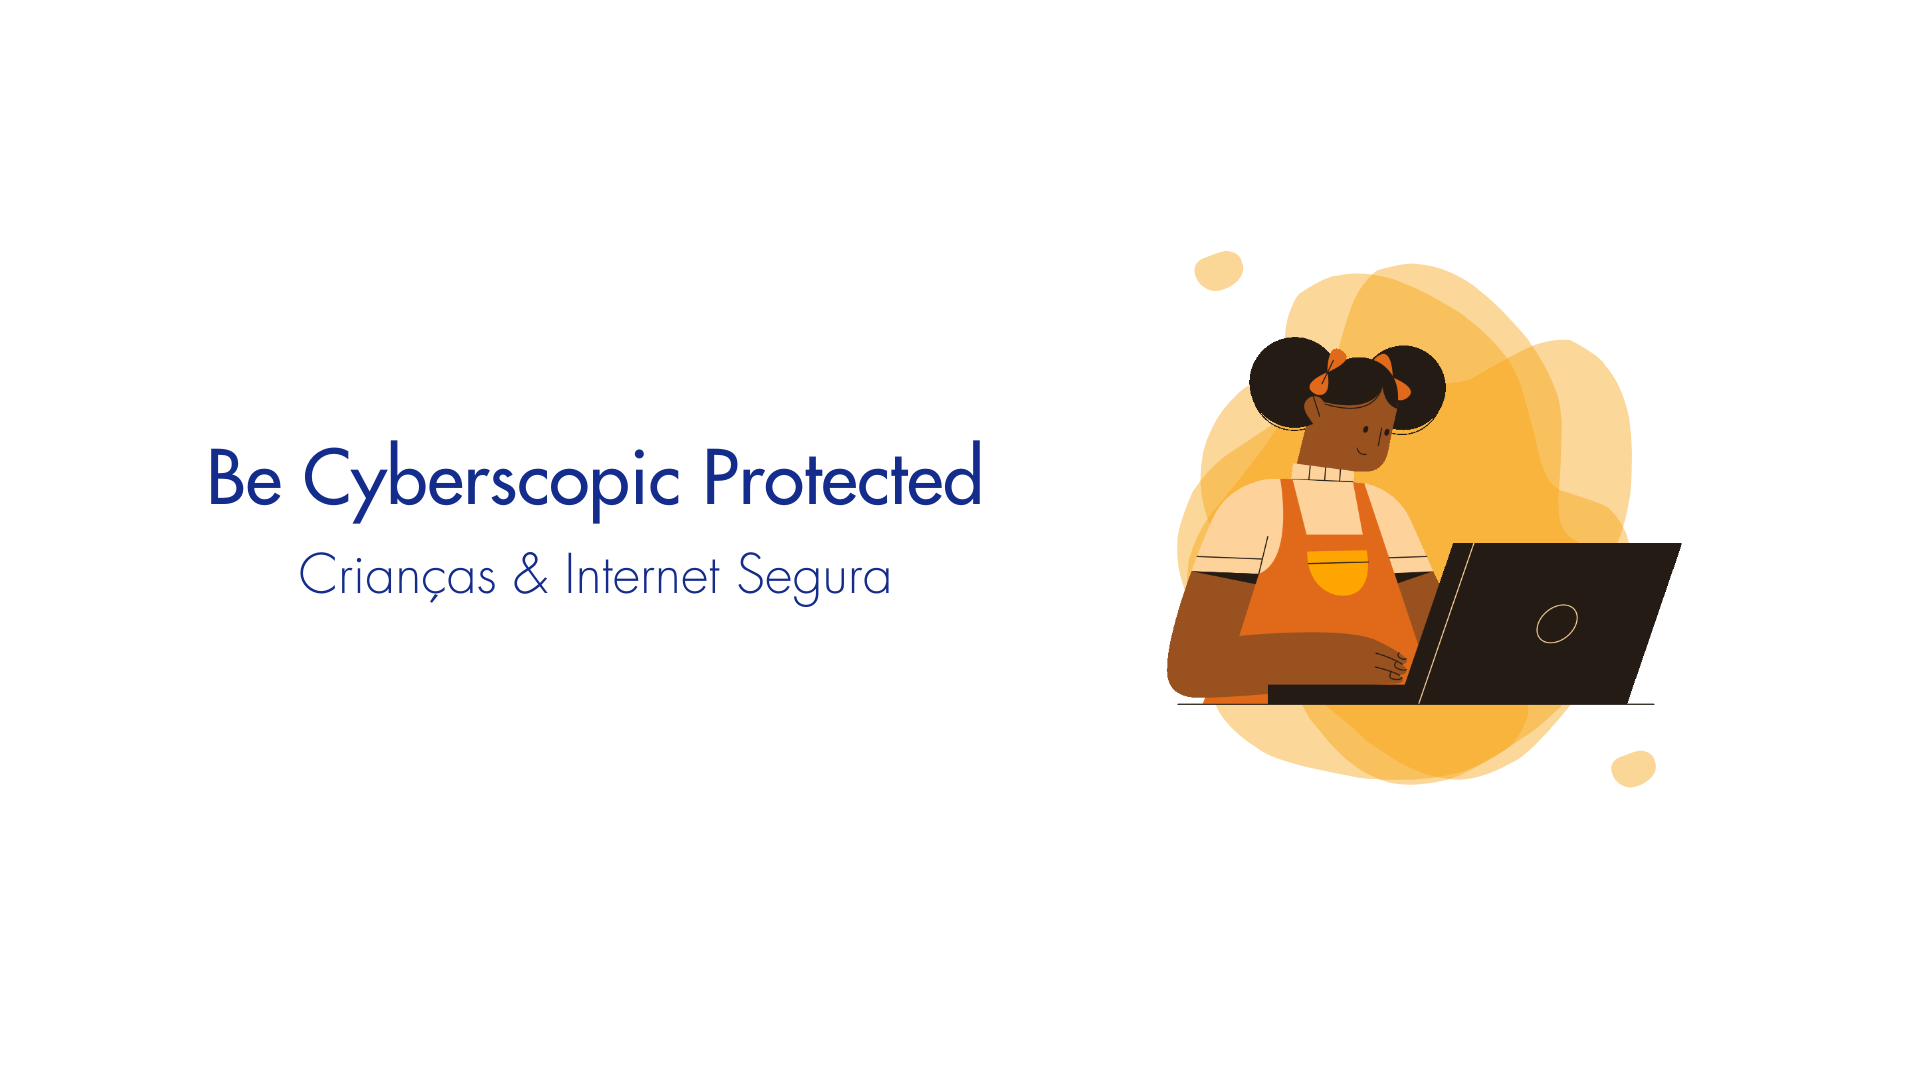 Be Cyberscopic Protected – Crianças & Internet Segura